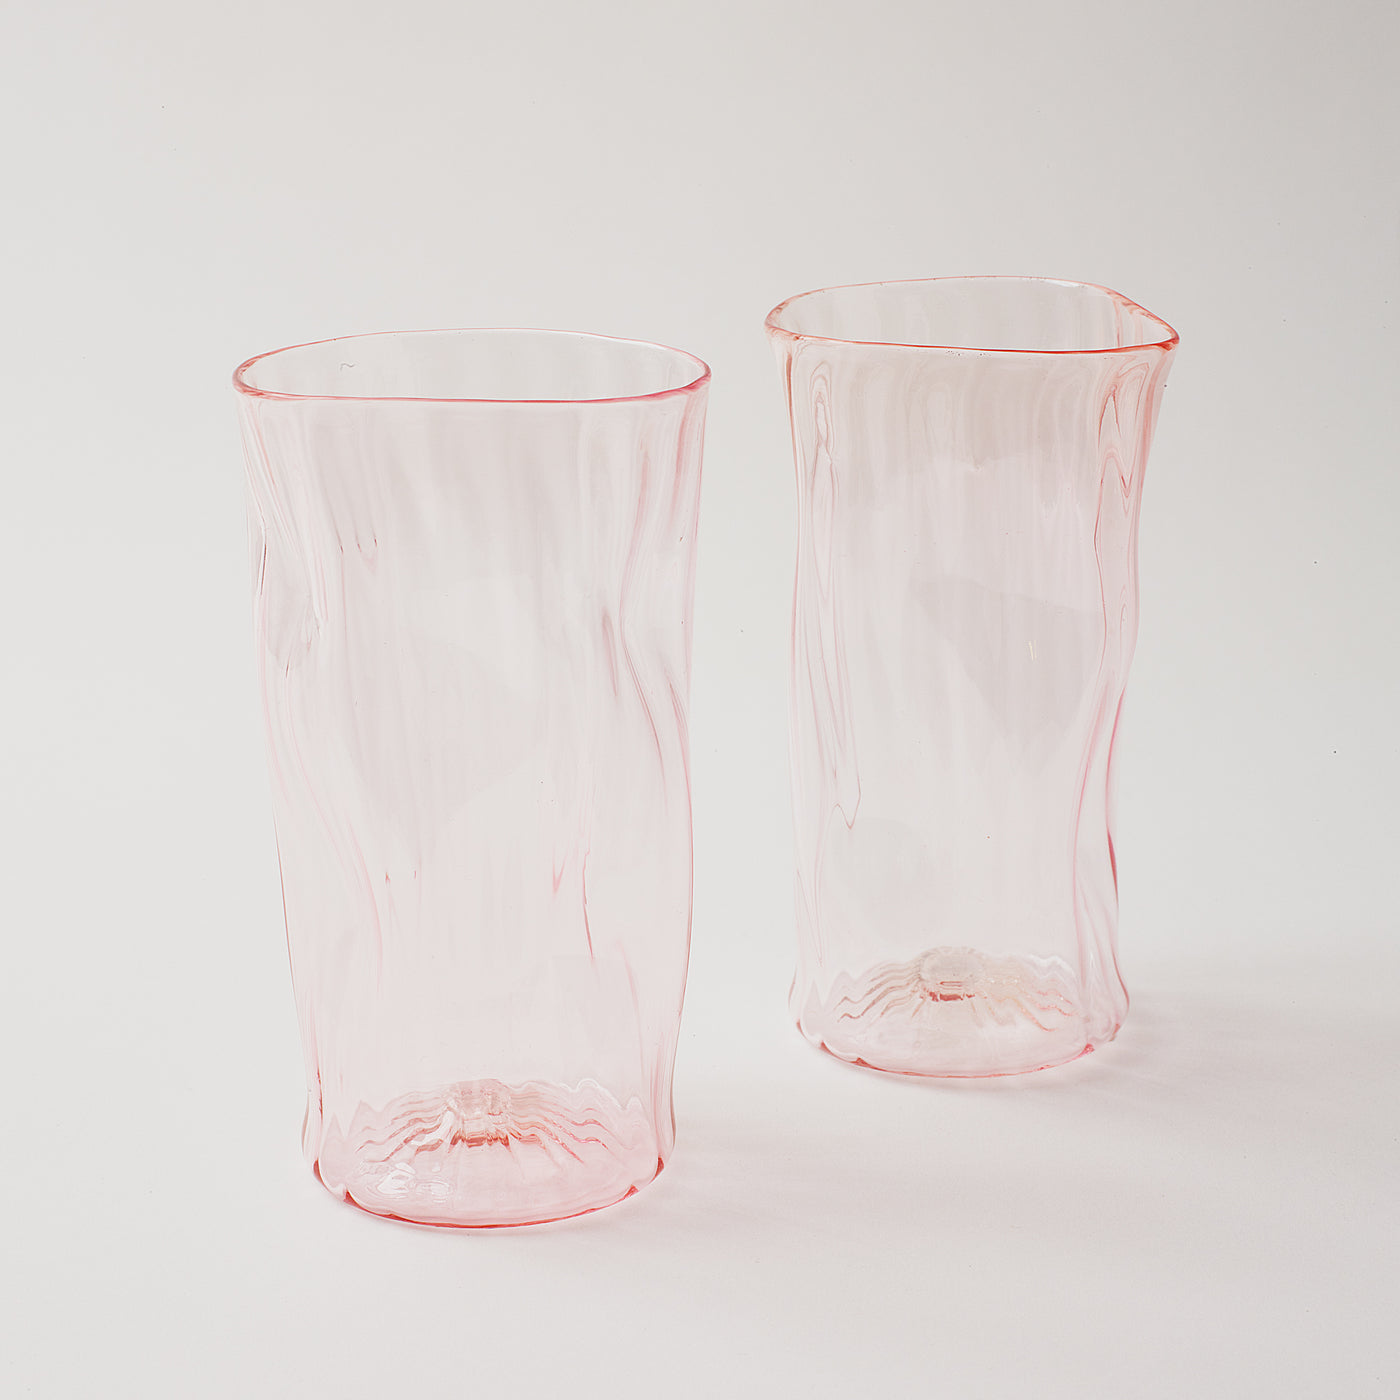 Wabi Sabi Water Glasses - set of two